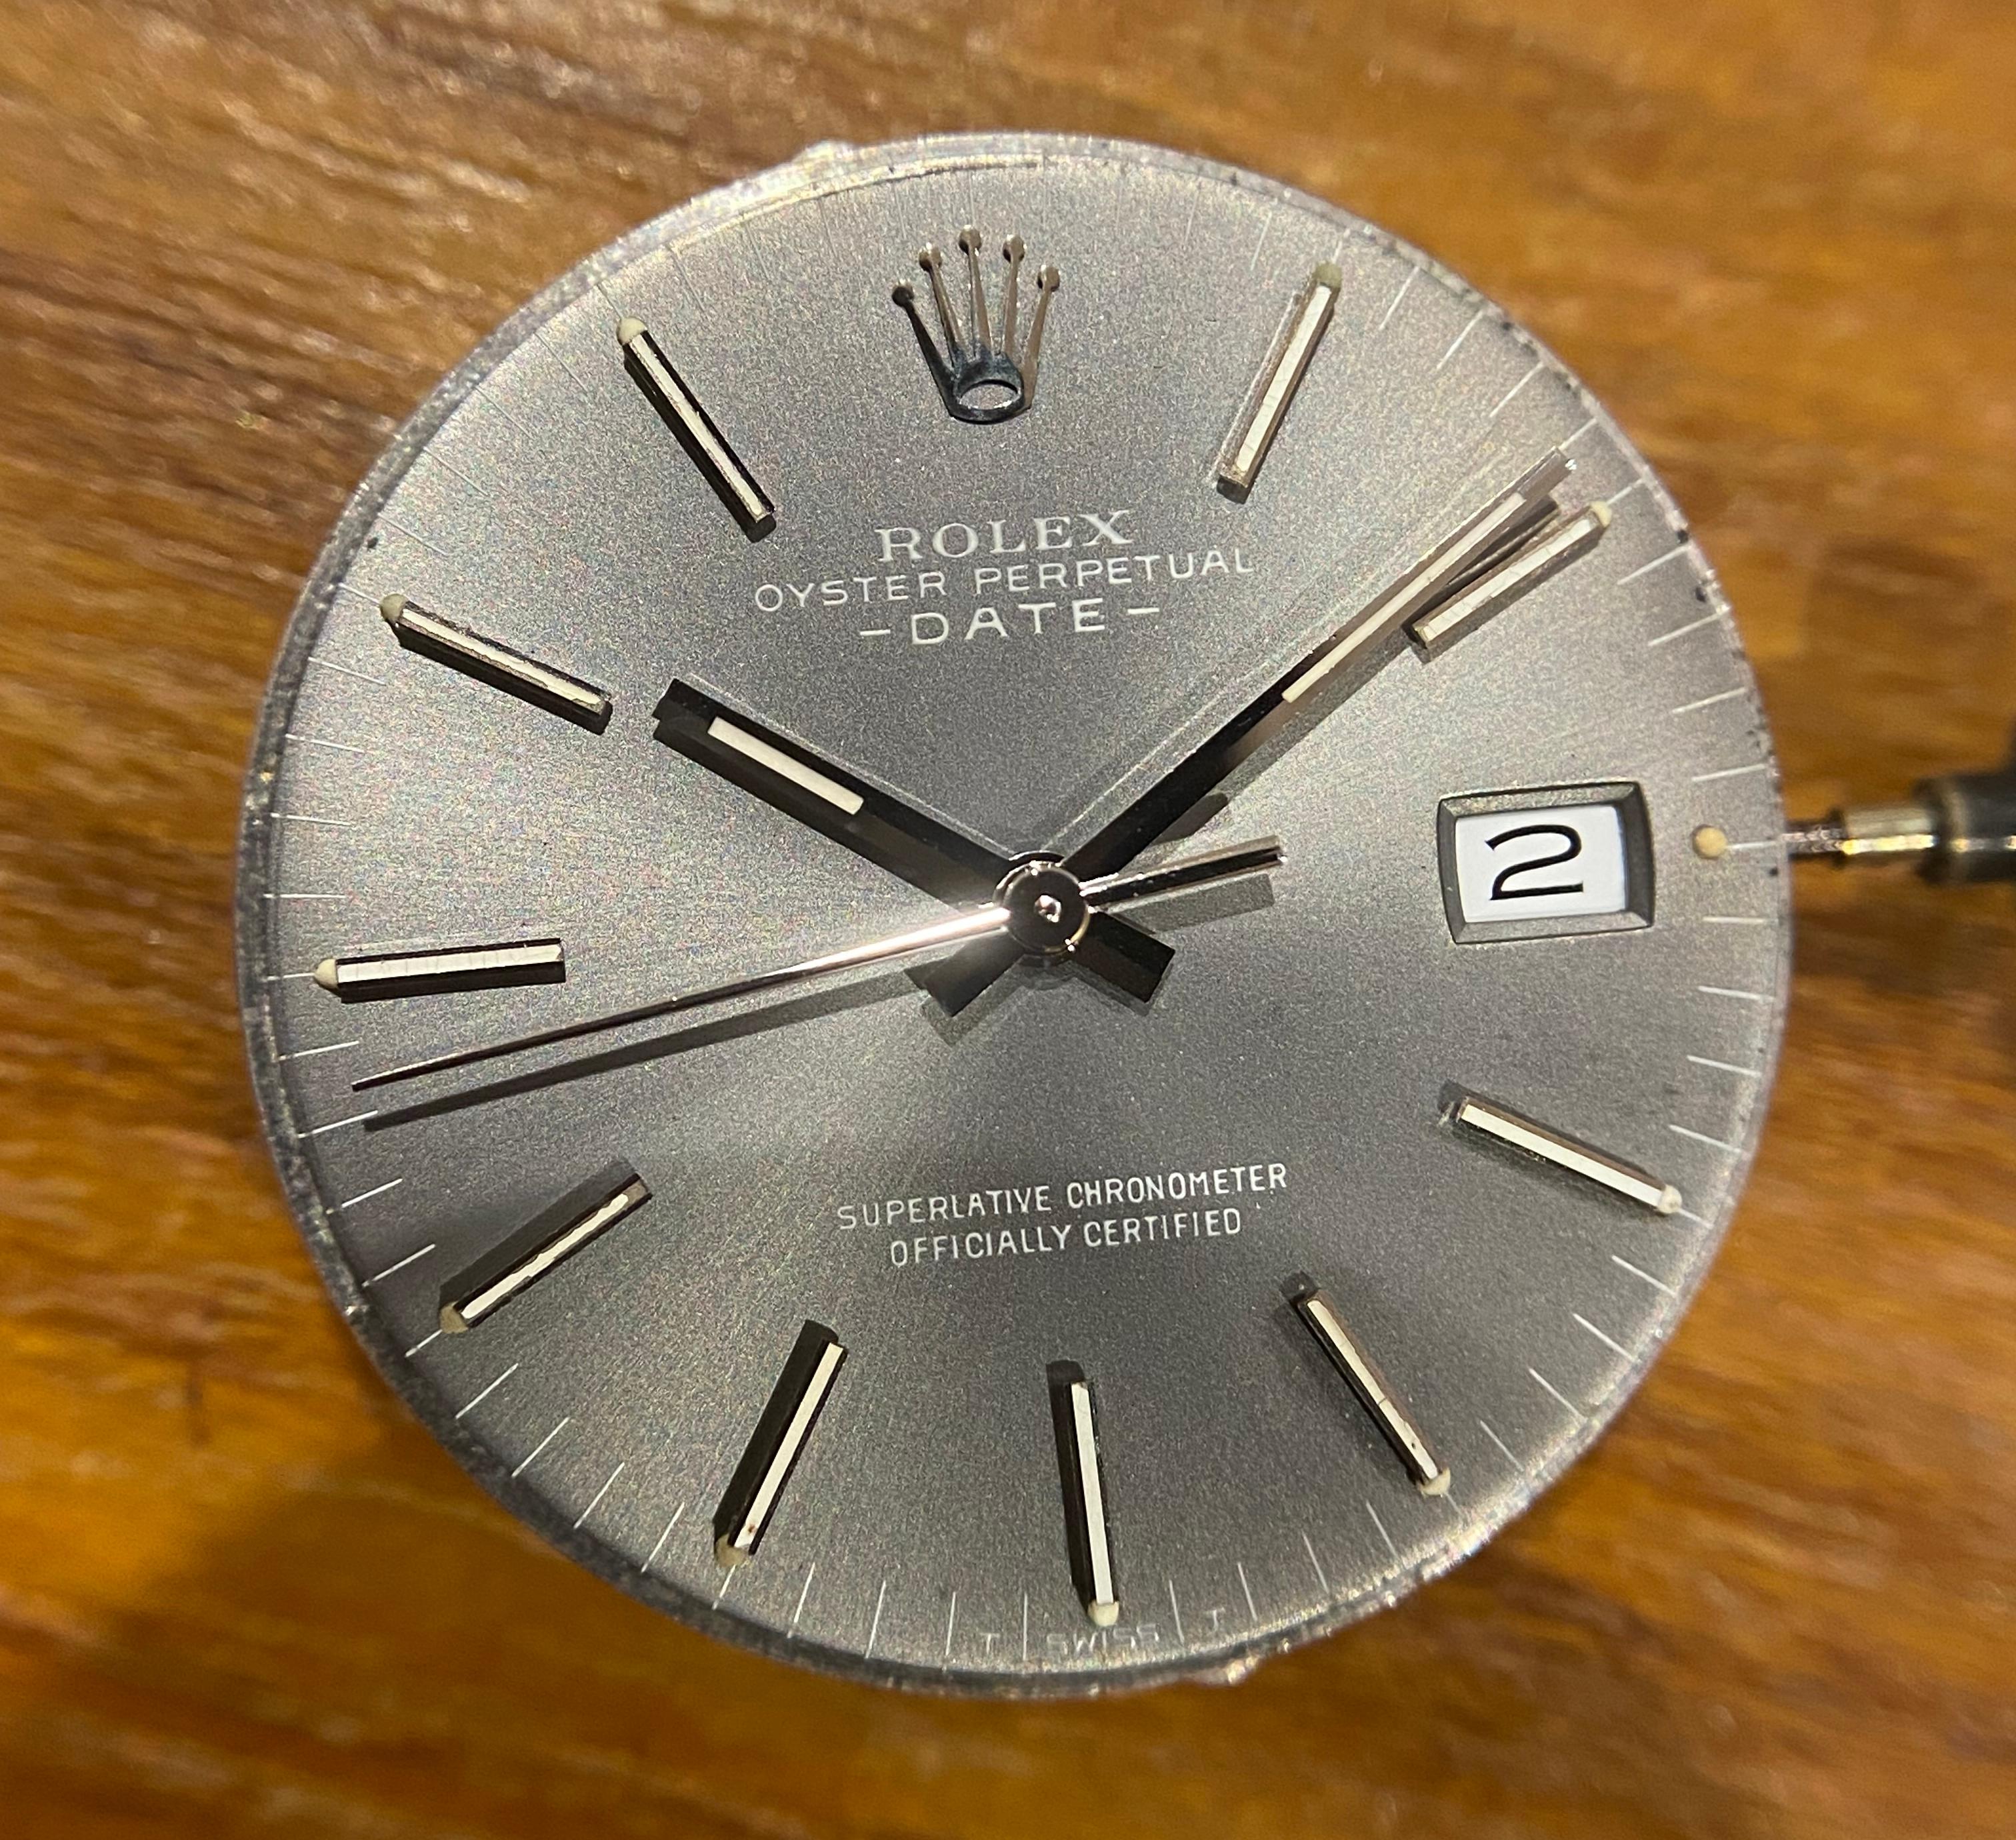 Femenino o masculino Reloj Rolex automático Oyster Perpetual Fecha Esfera Gris 1500 de 34 mm, 1969